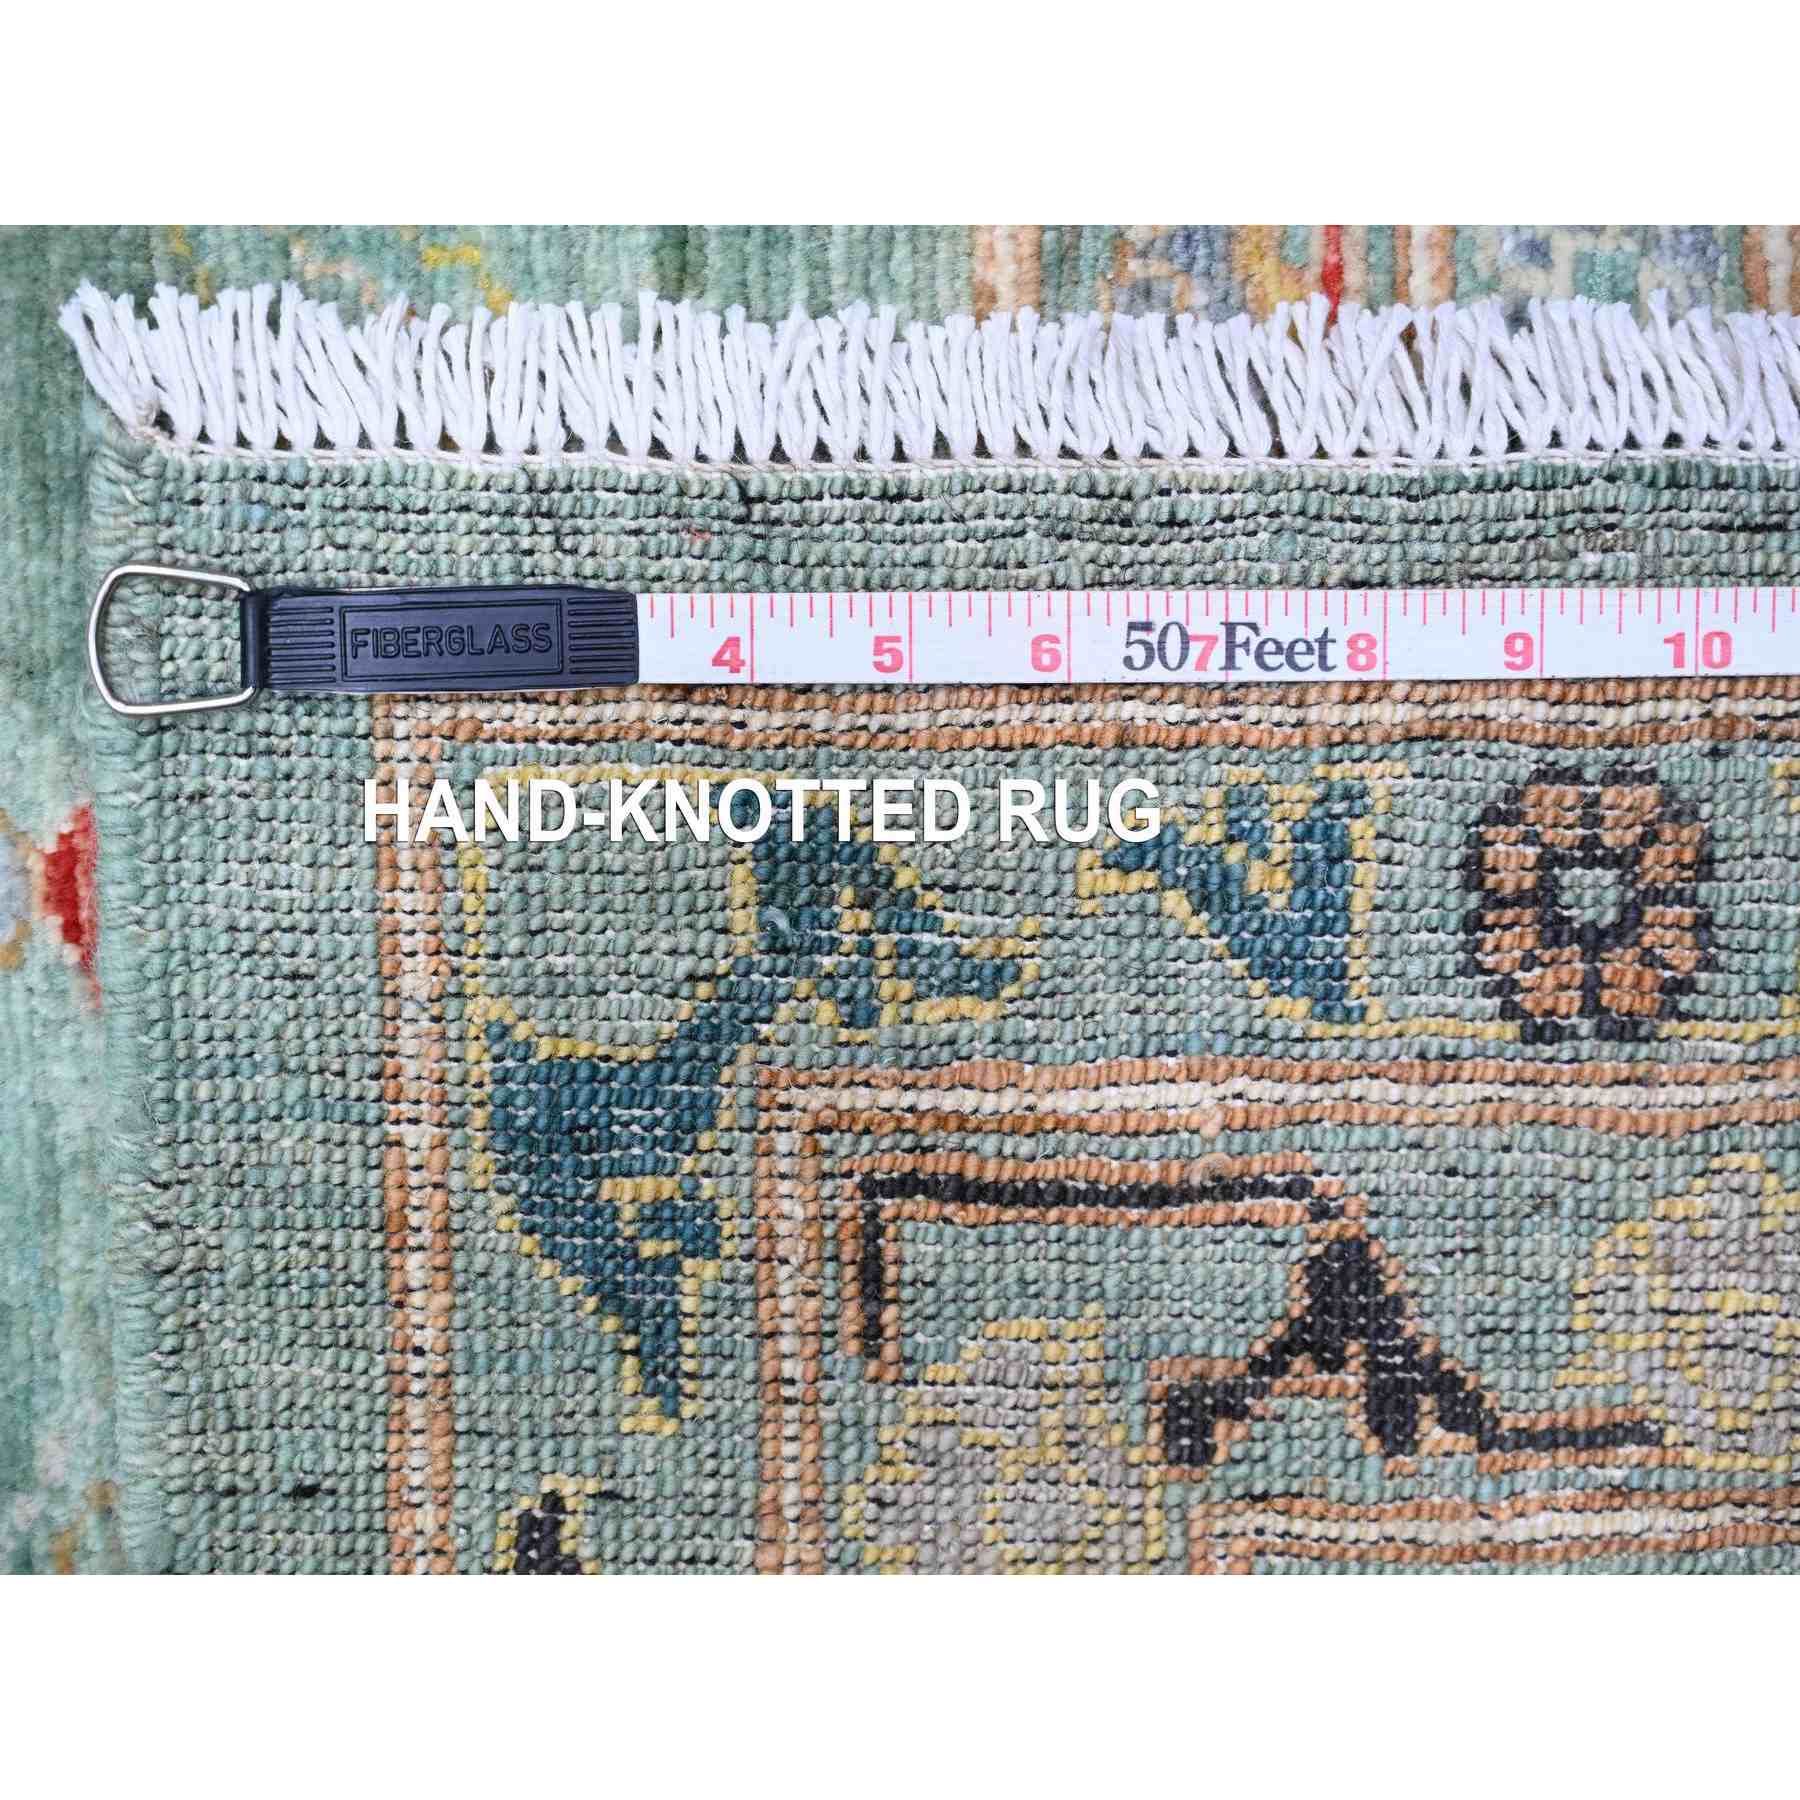 Mamluk-Hand-Knotted-Rug-441525